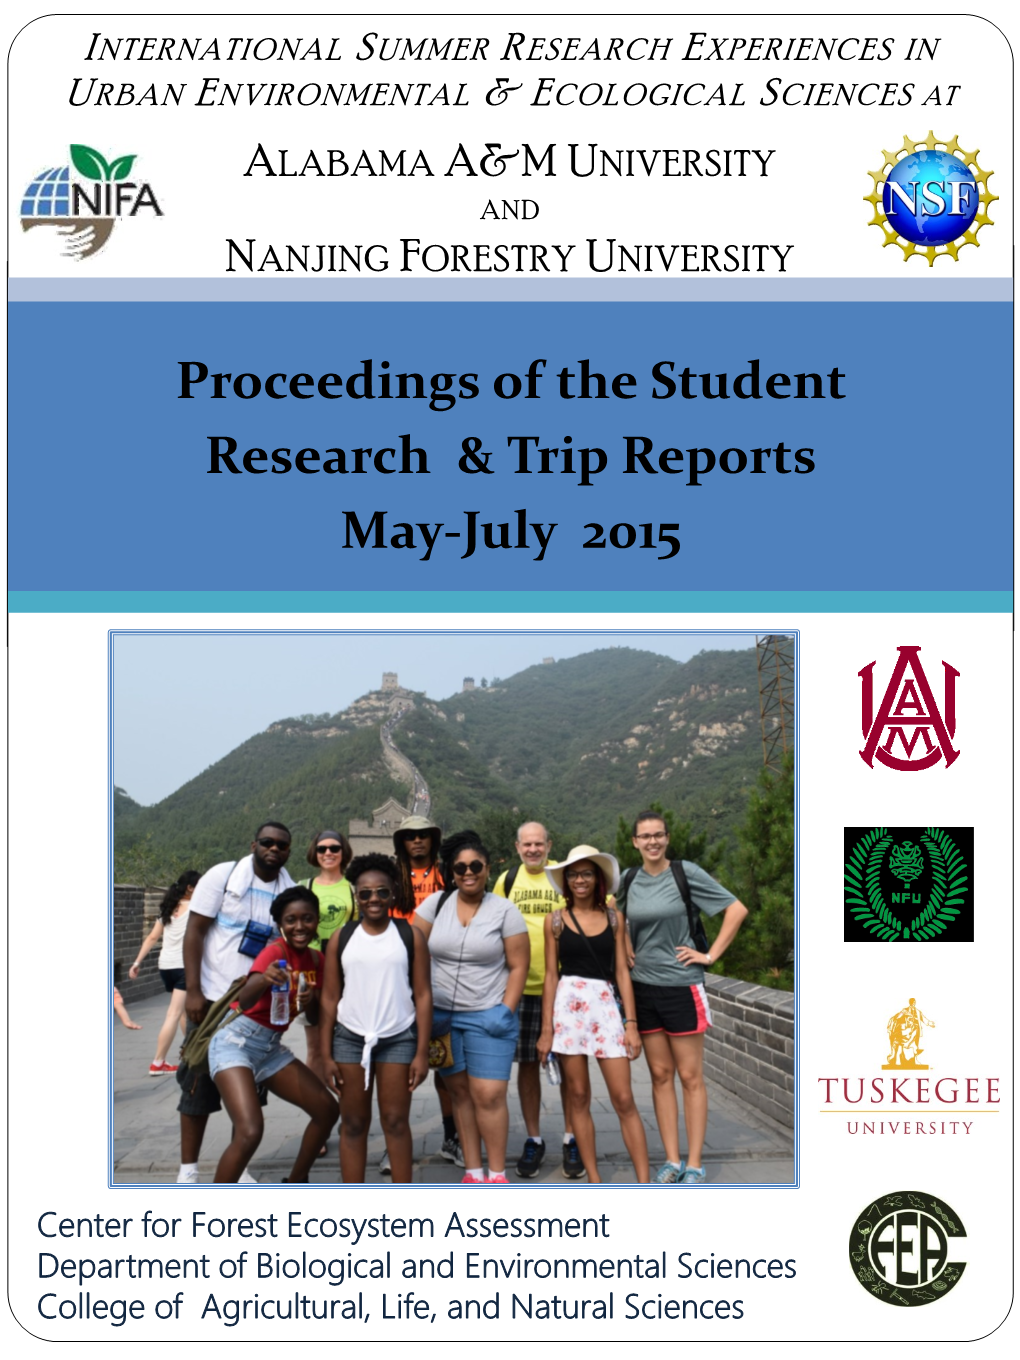 Read the 2015 Student Proceedings